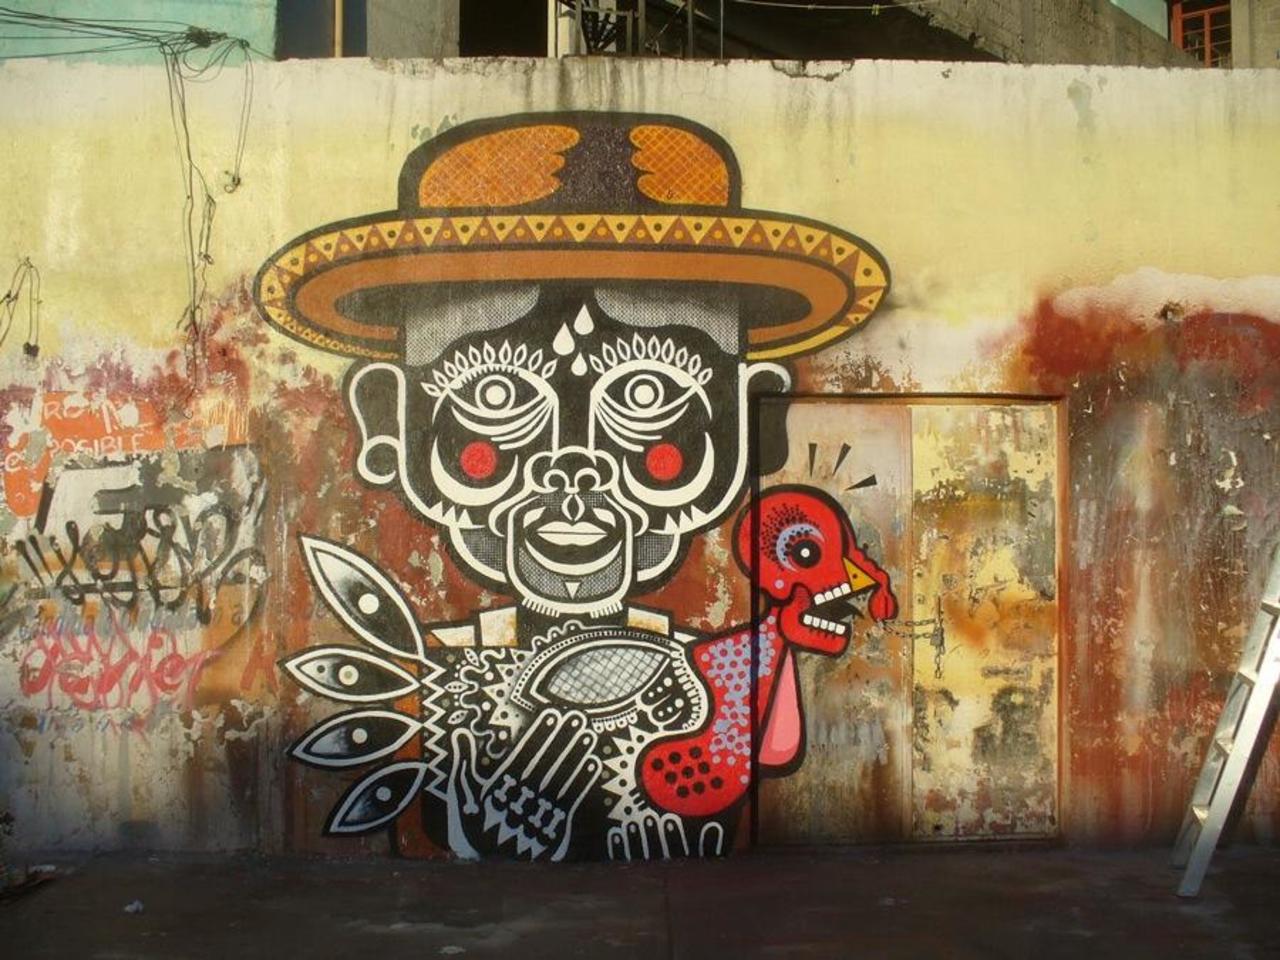 “@Pitchuskita: Neuzz, Mexico
#streetart #art #urbanart #graffiti #wall http://t.co/vDuW6axxLc